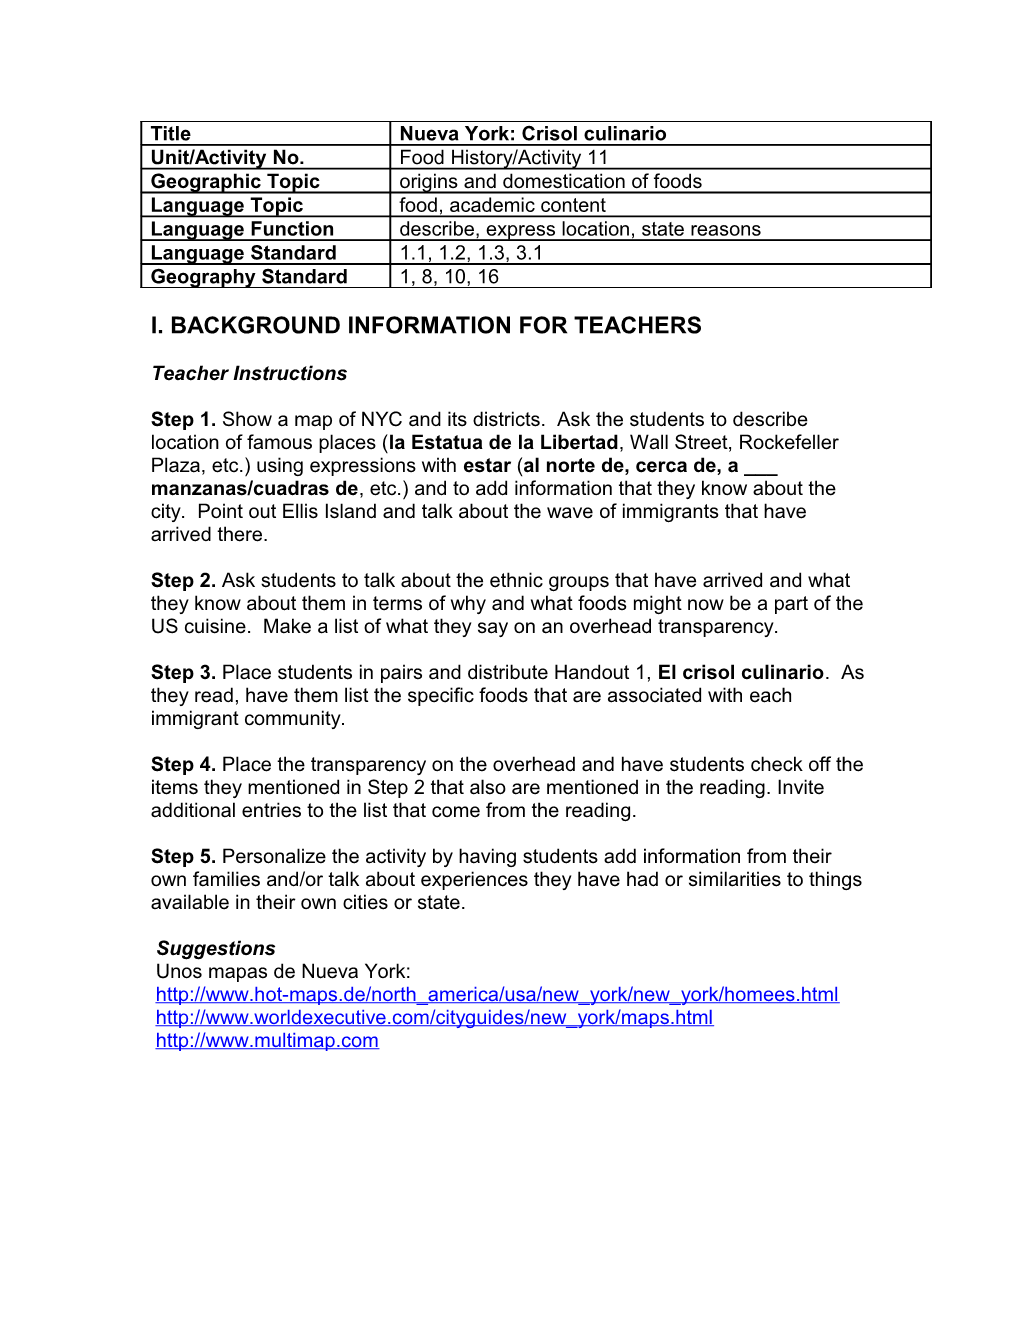 I. Background Information for Teachers